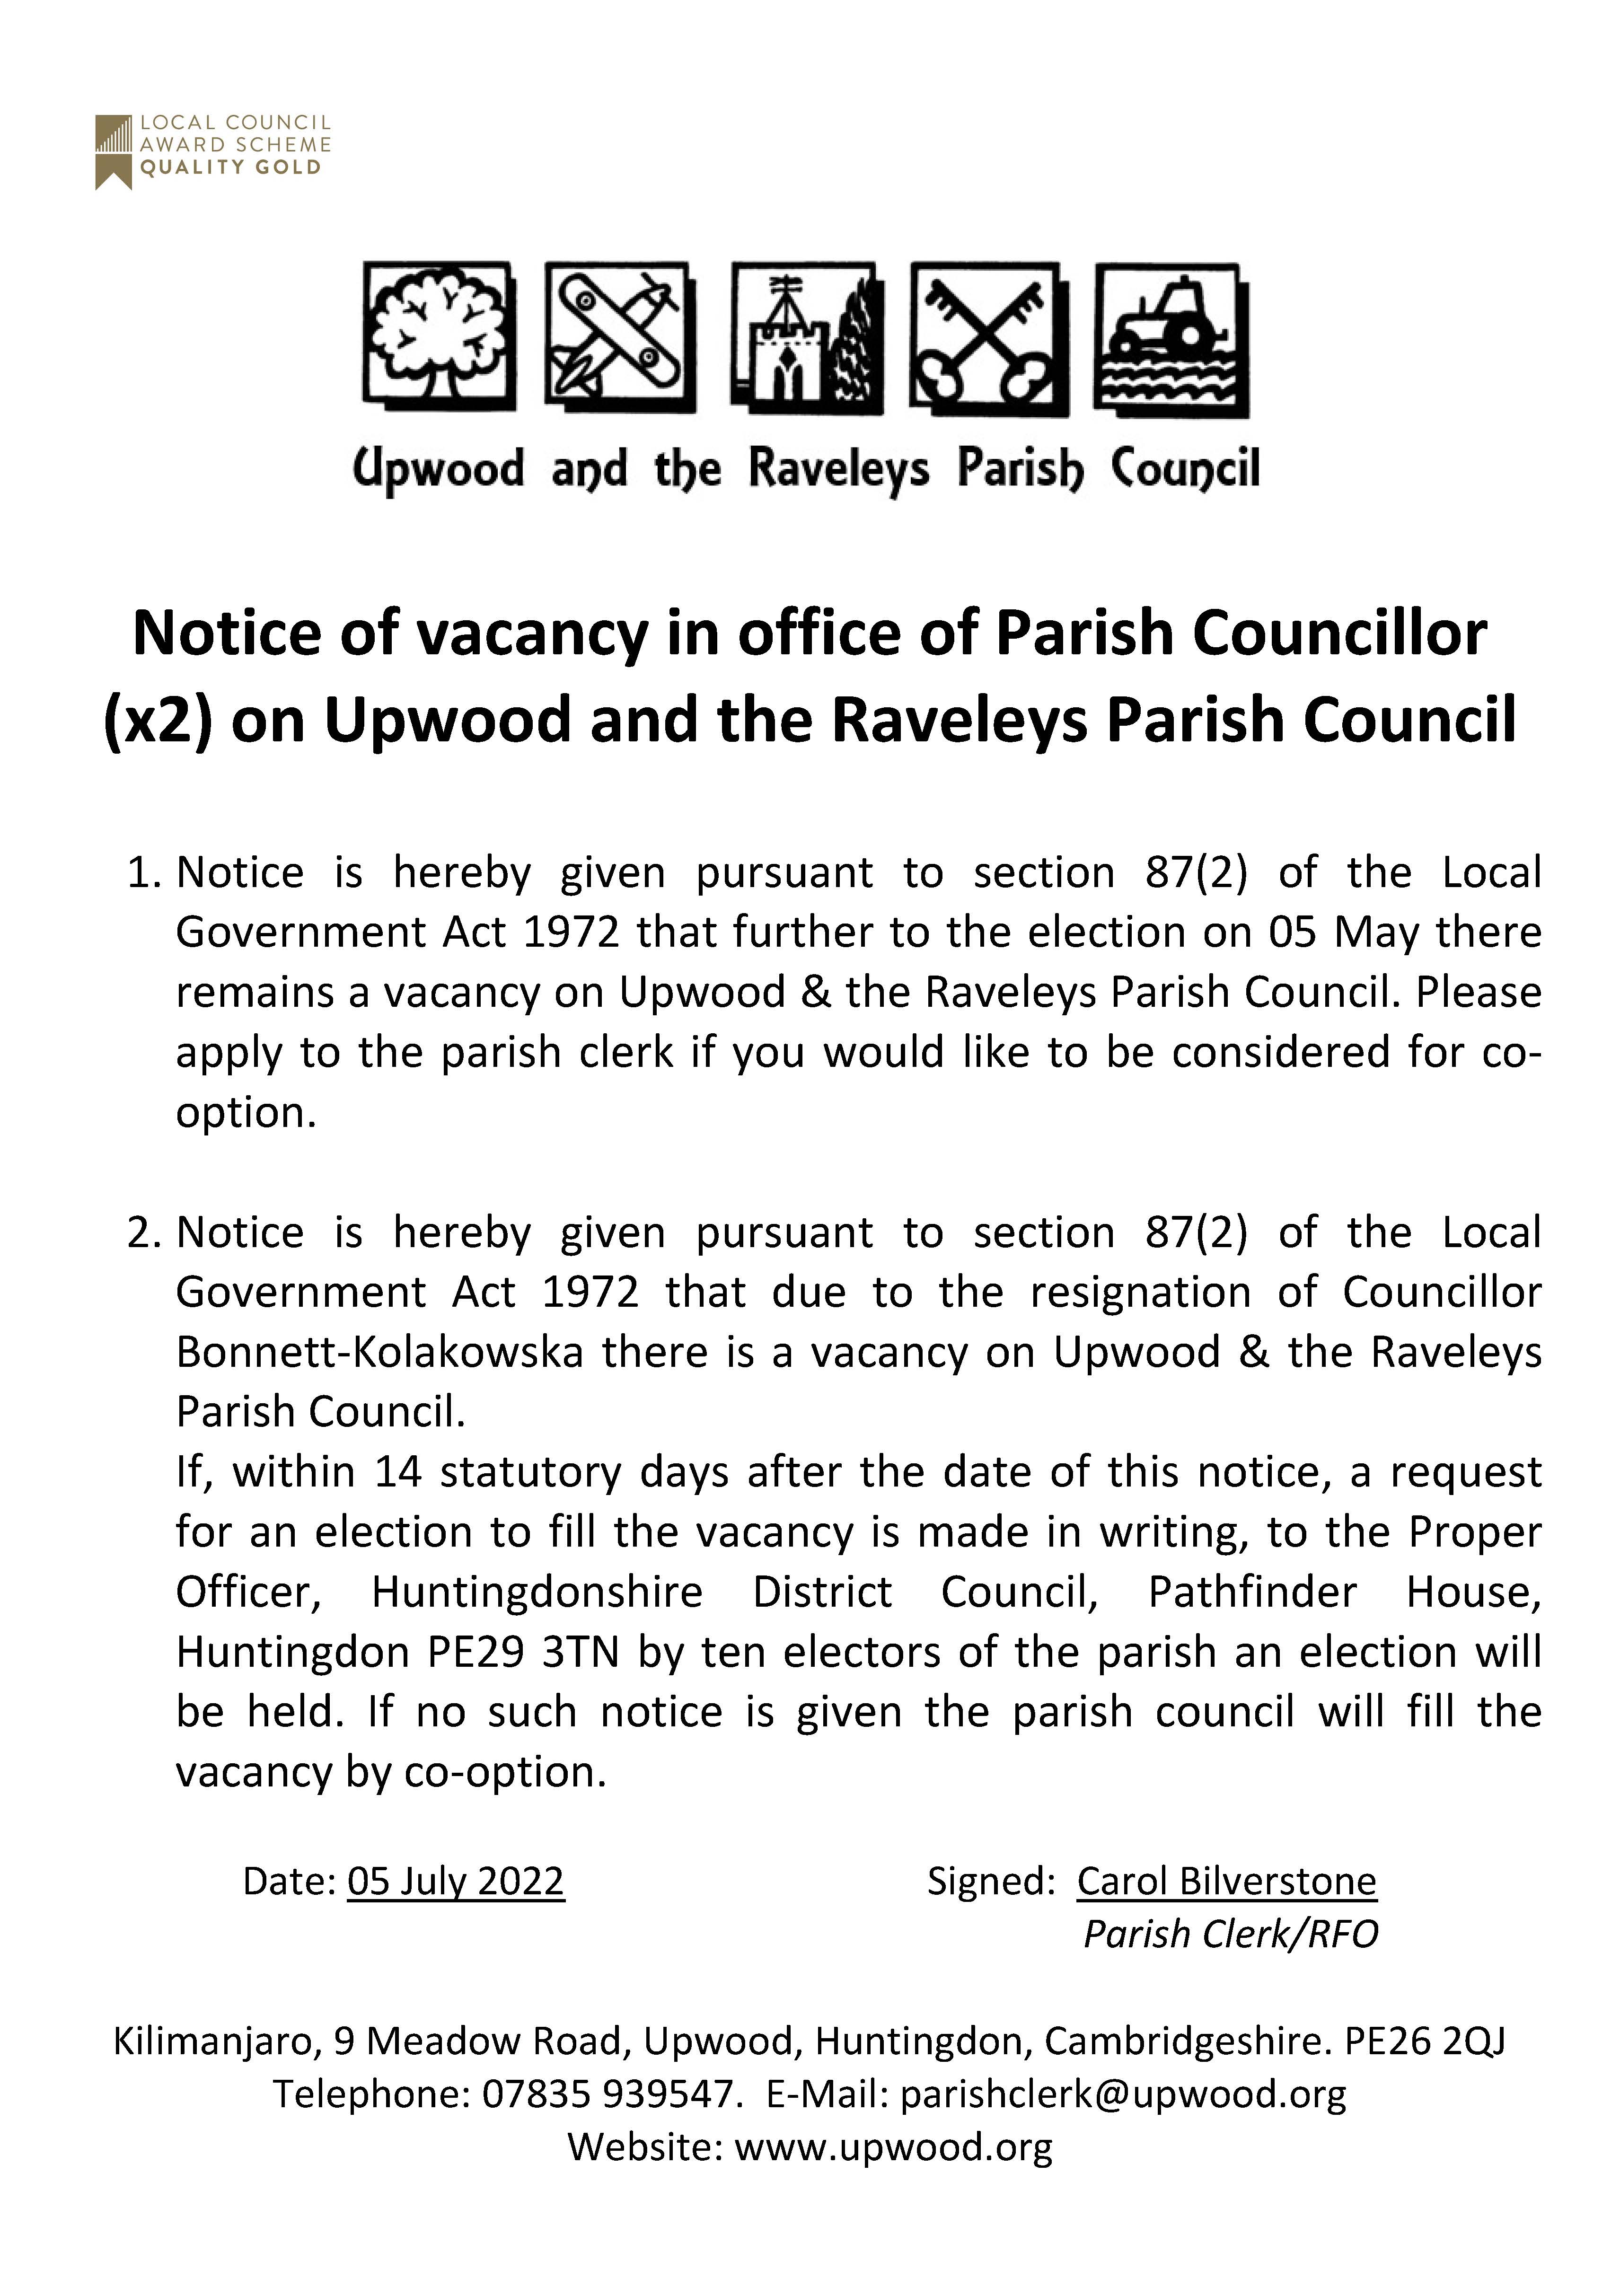 Notice of Vacancy for Parish Councillors. 04.07.22